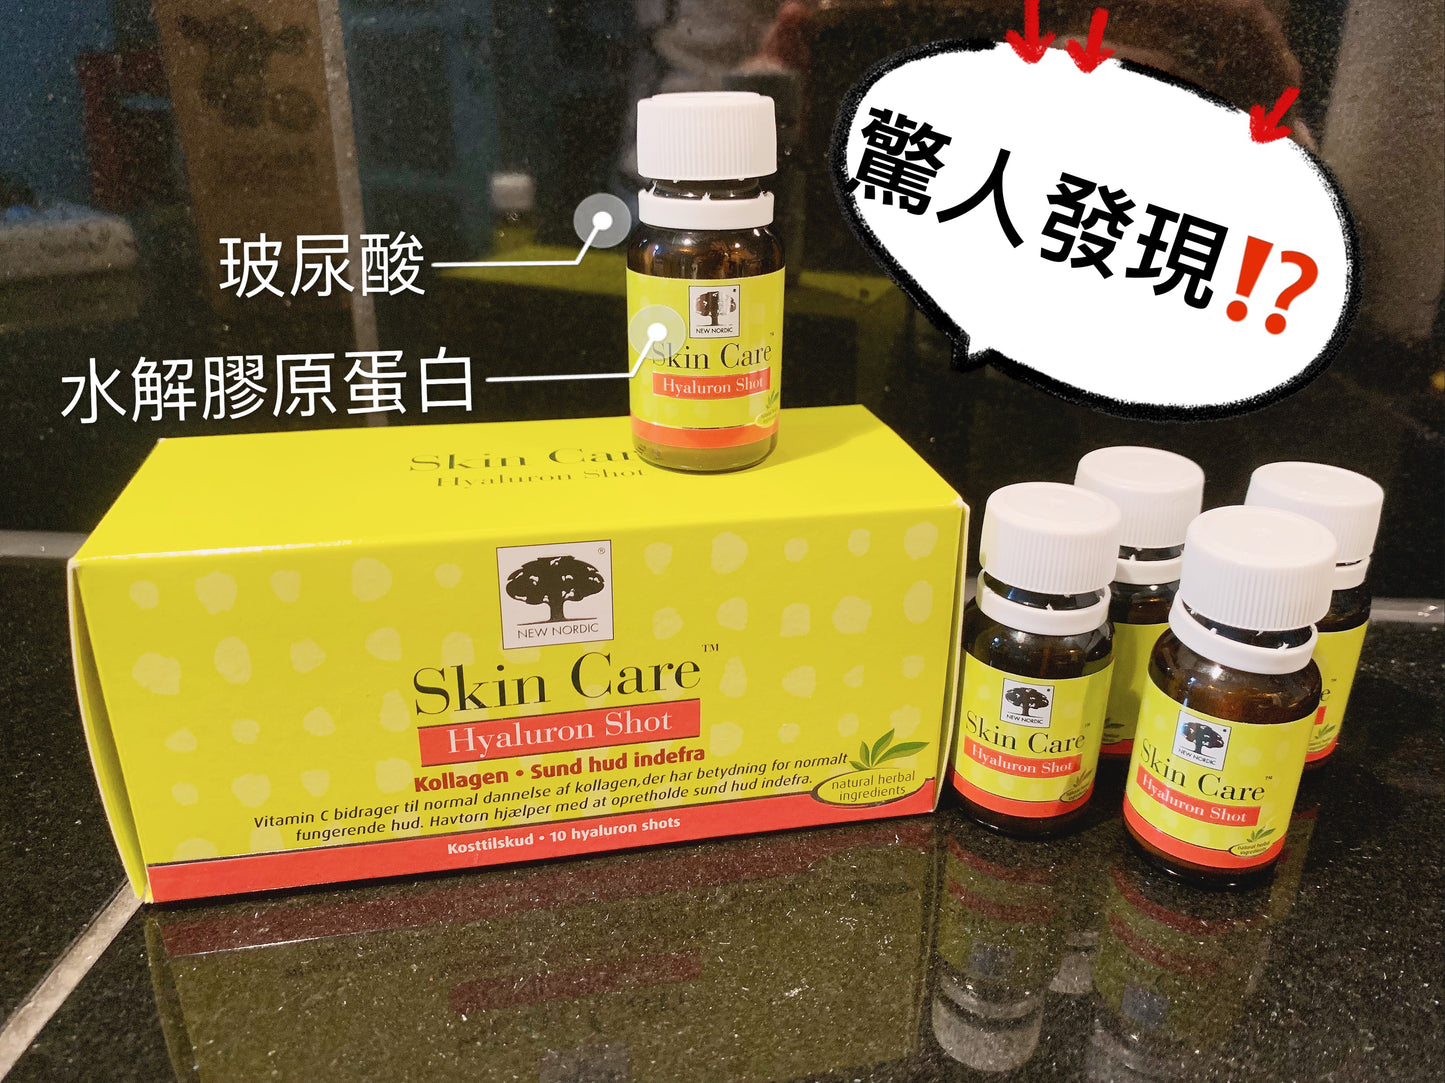 Skin Care hyaluron shot  玻尿酸口服液 - buy European skincare in Hong Kong - 1click2beauty